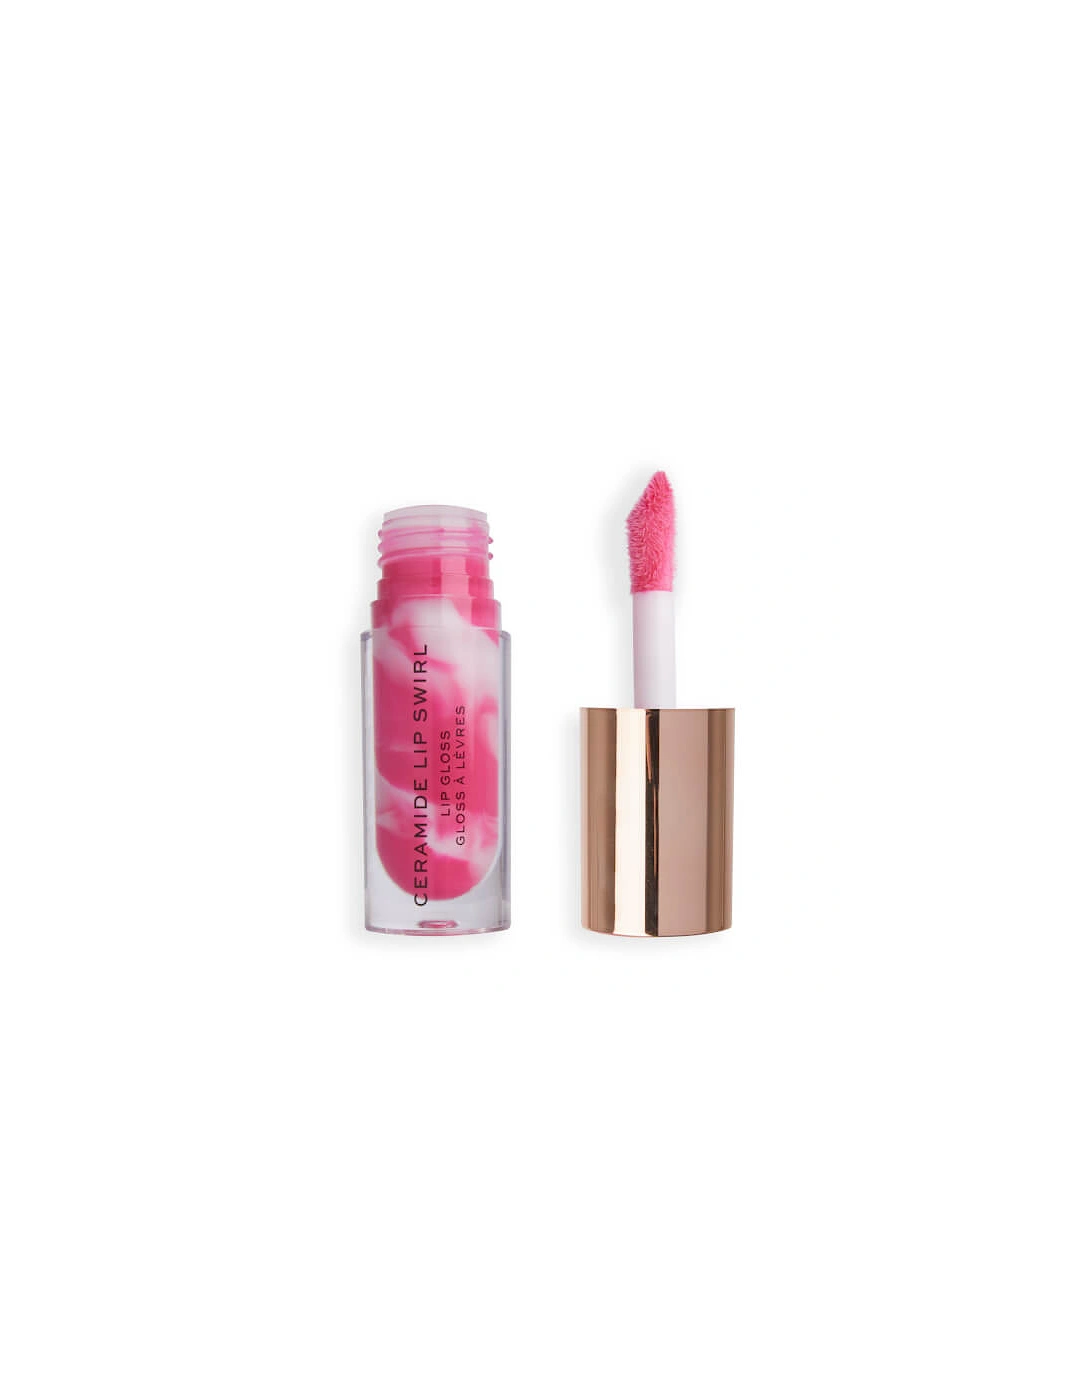 Makeup Lip Swirl Ceramide Gloss - Berry Pink, 2 of 1